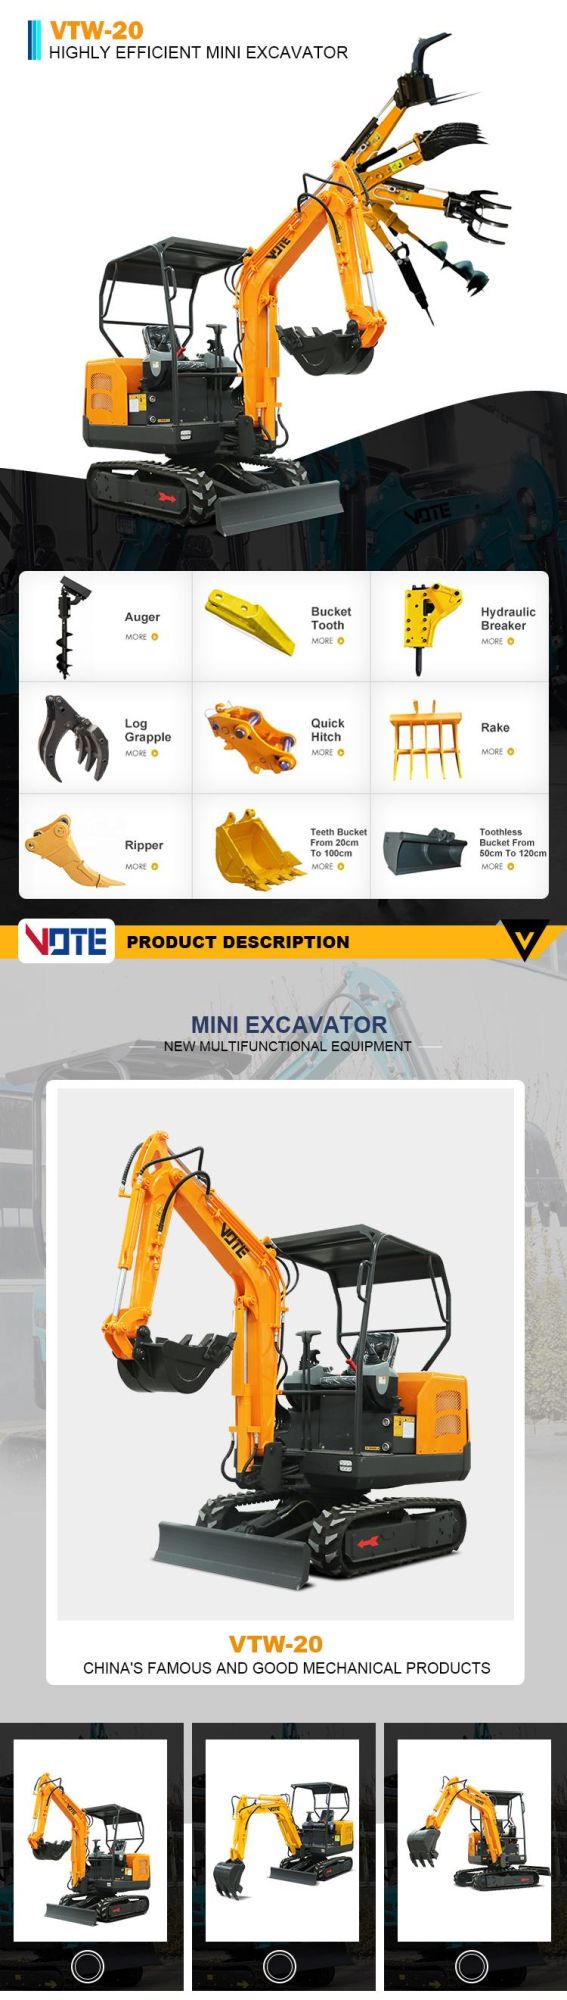 Mini Crawler Excavator 2.0 Ton Cheap Price New Excavator for Wholesale Add Cab Air-Conditioning Mini Excavator Sell